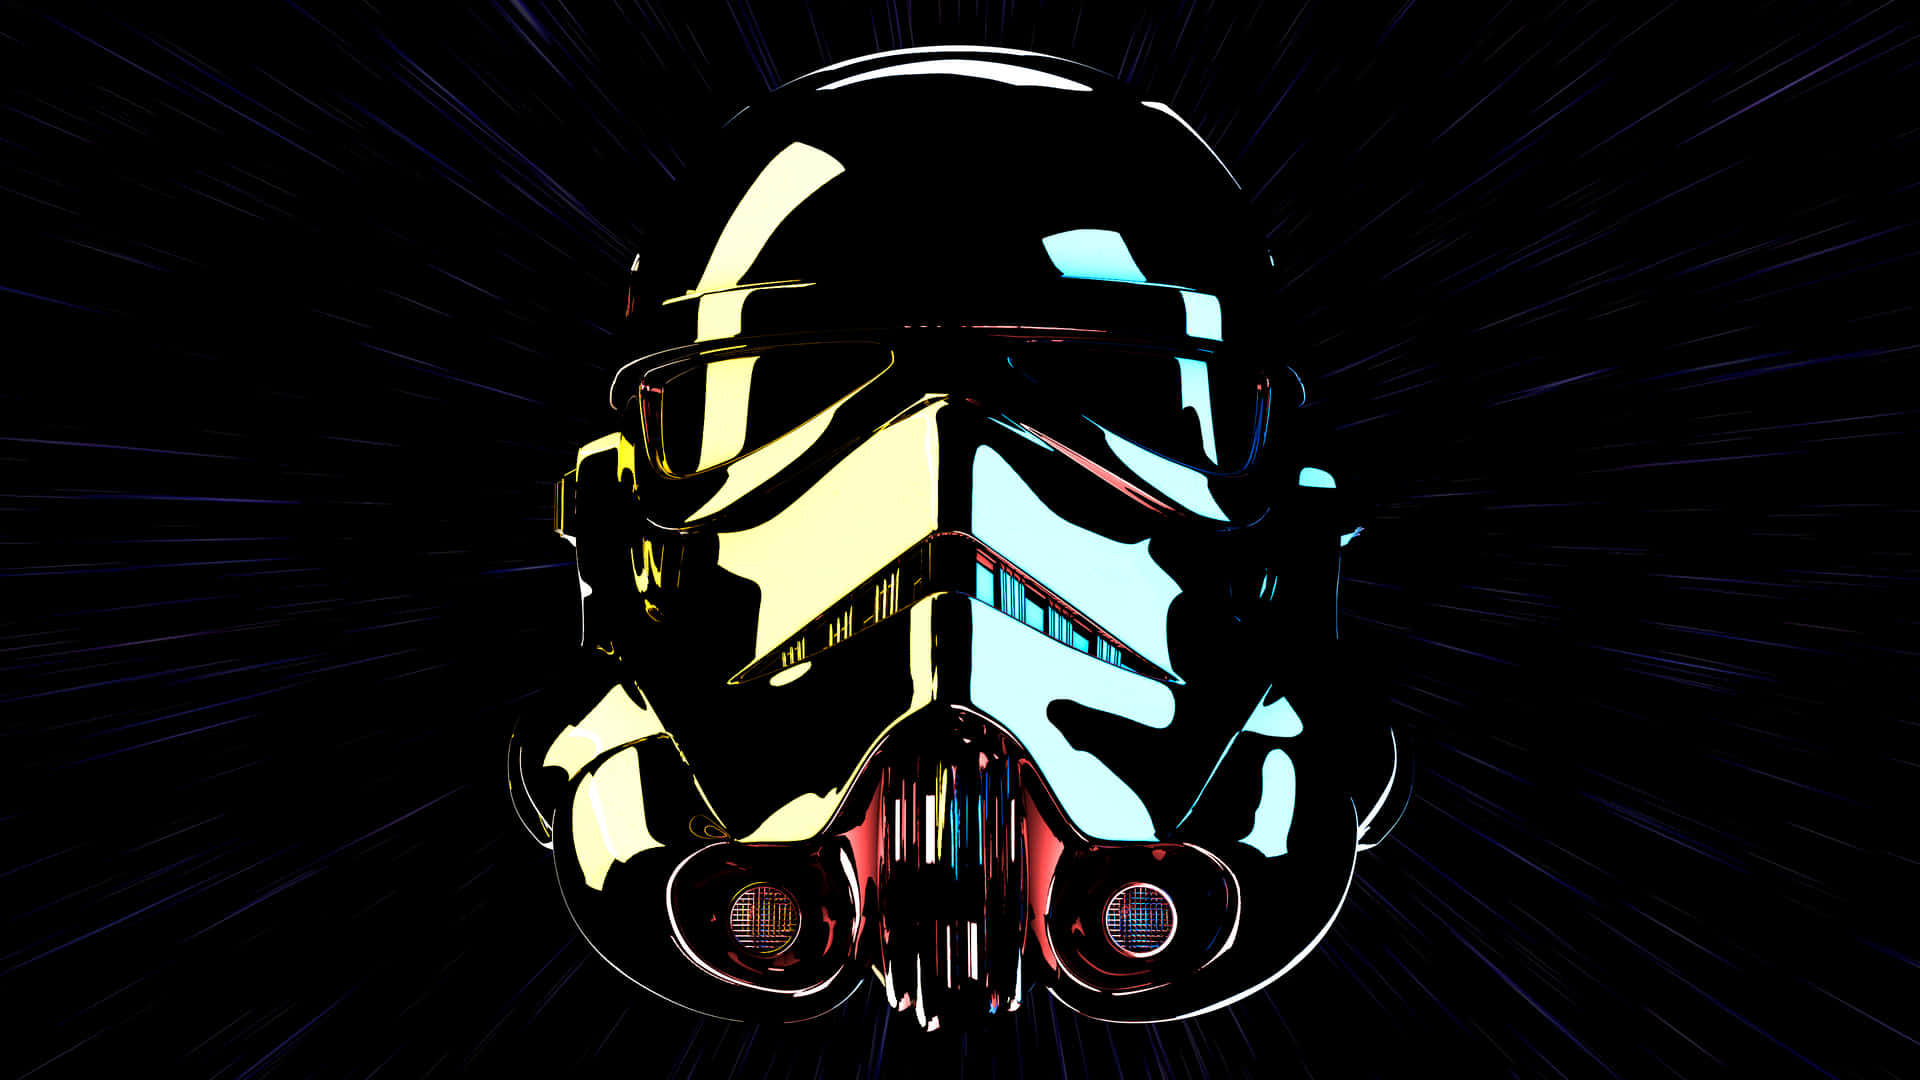 Starwars Stormtrooper Mask Bakgrundsbild.